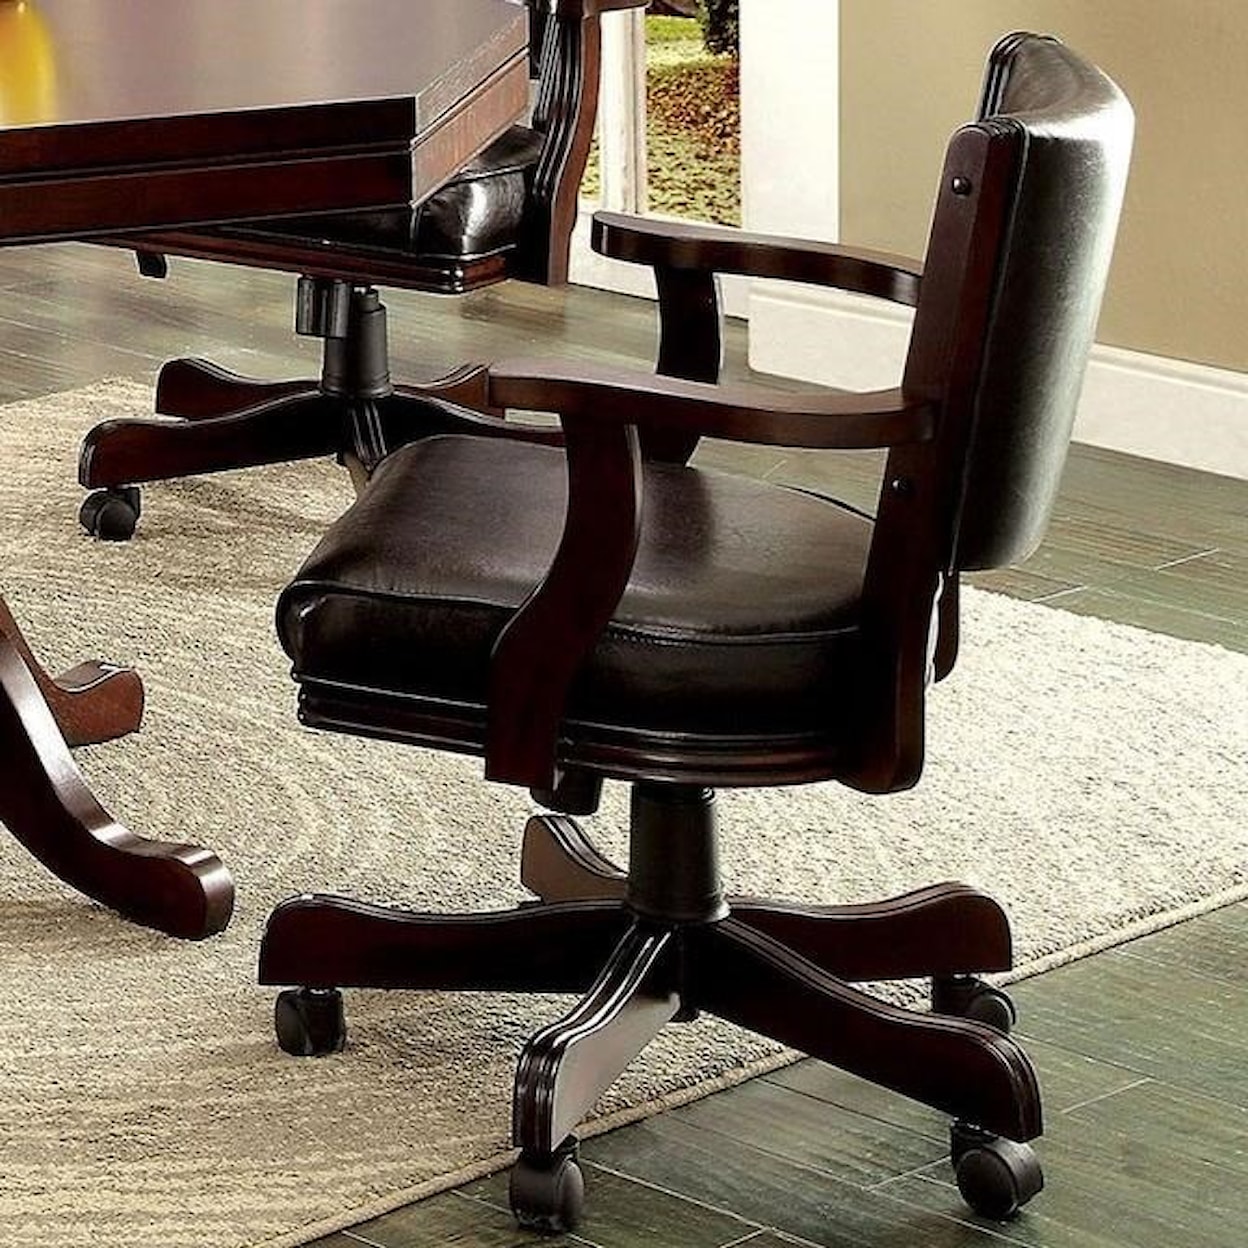 Furniture of America Rowan Adjustable Height Arm Chair